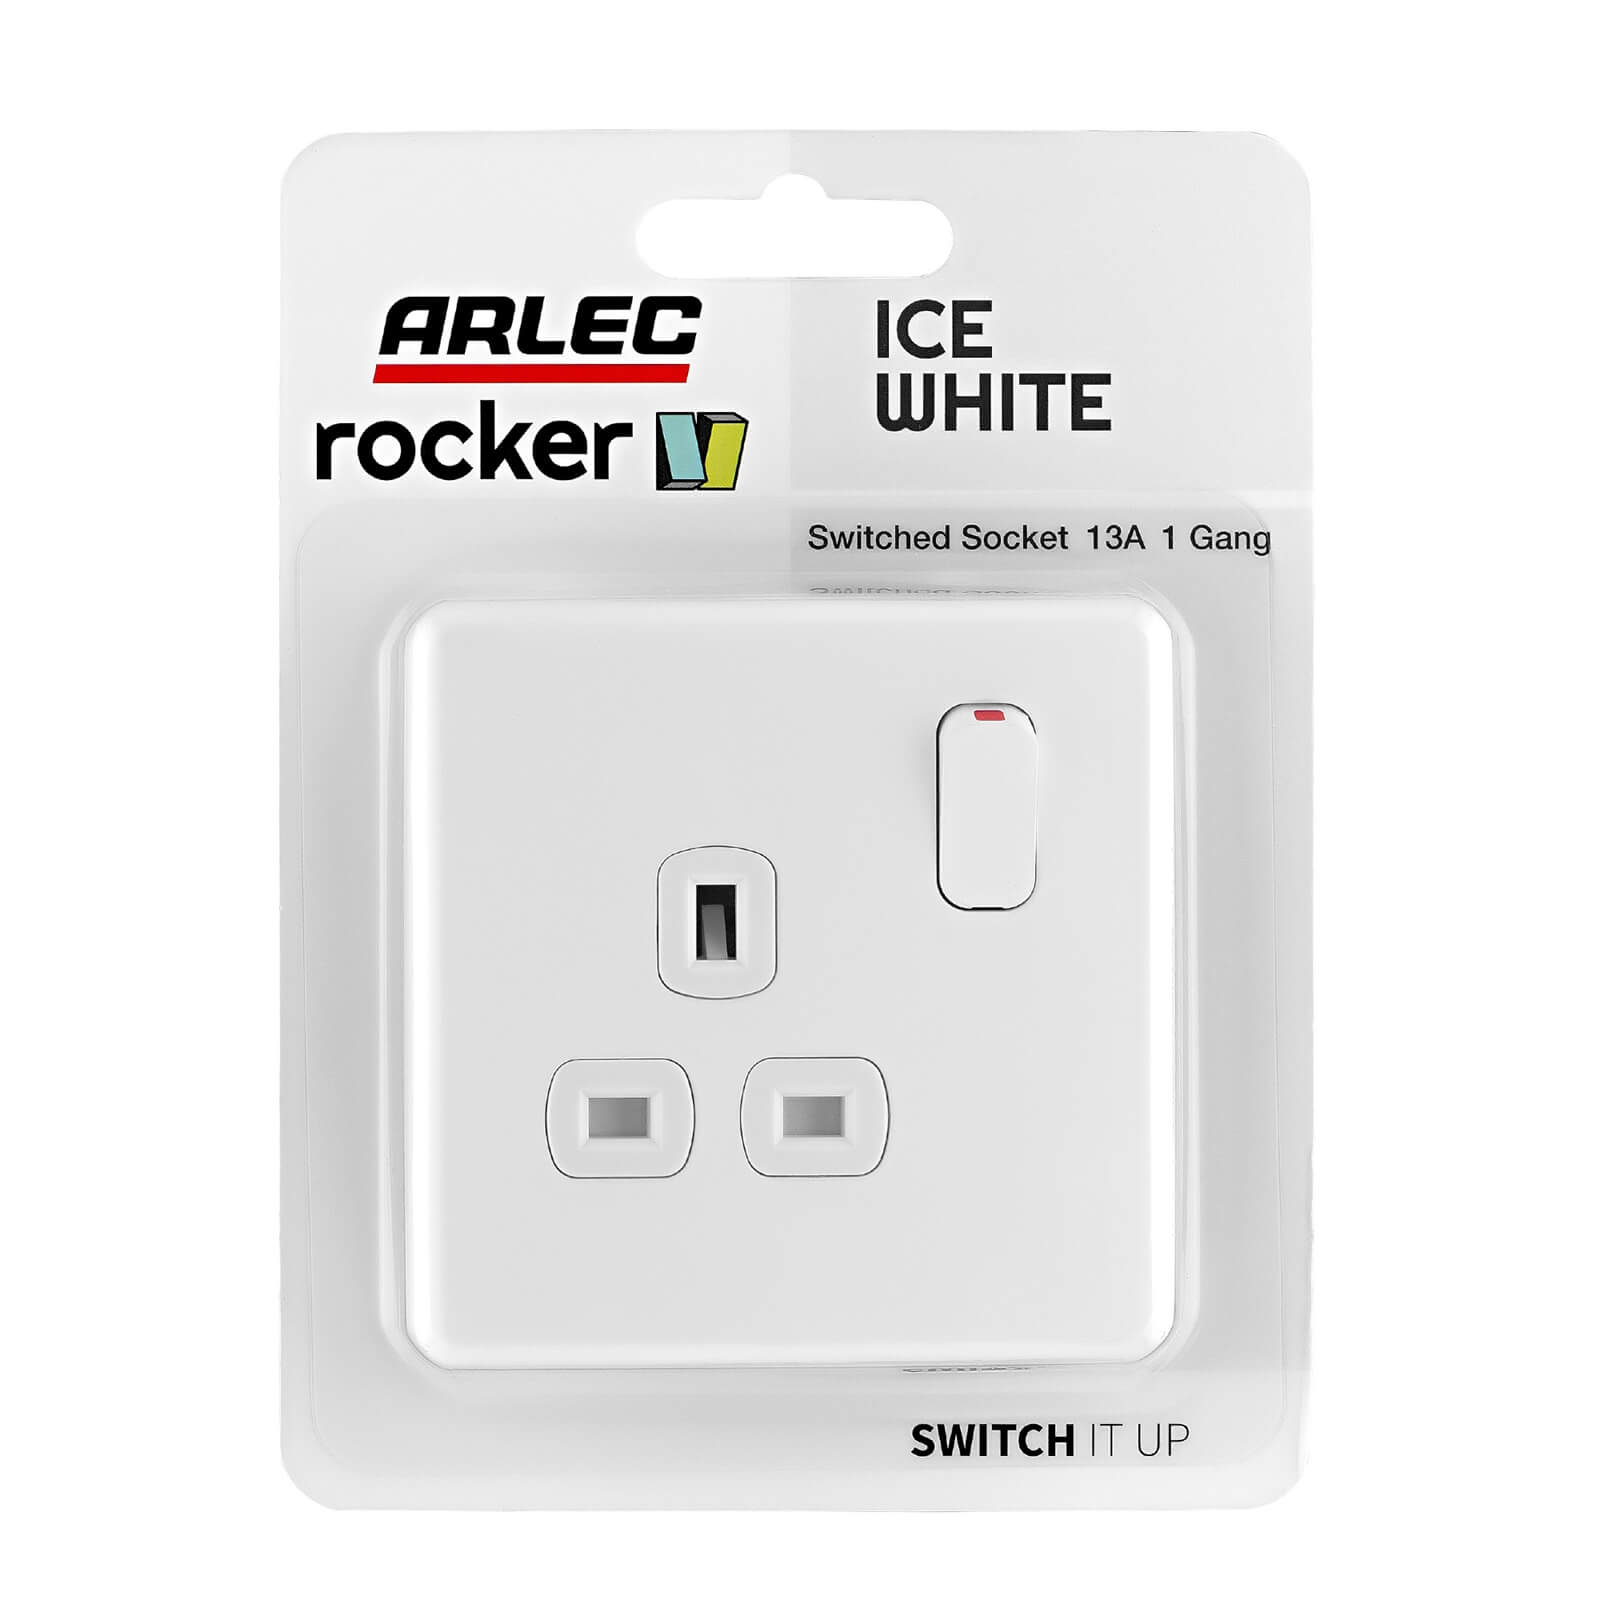 Arlec Rocker  13A 1 Gang Ice White Single switched socket